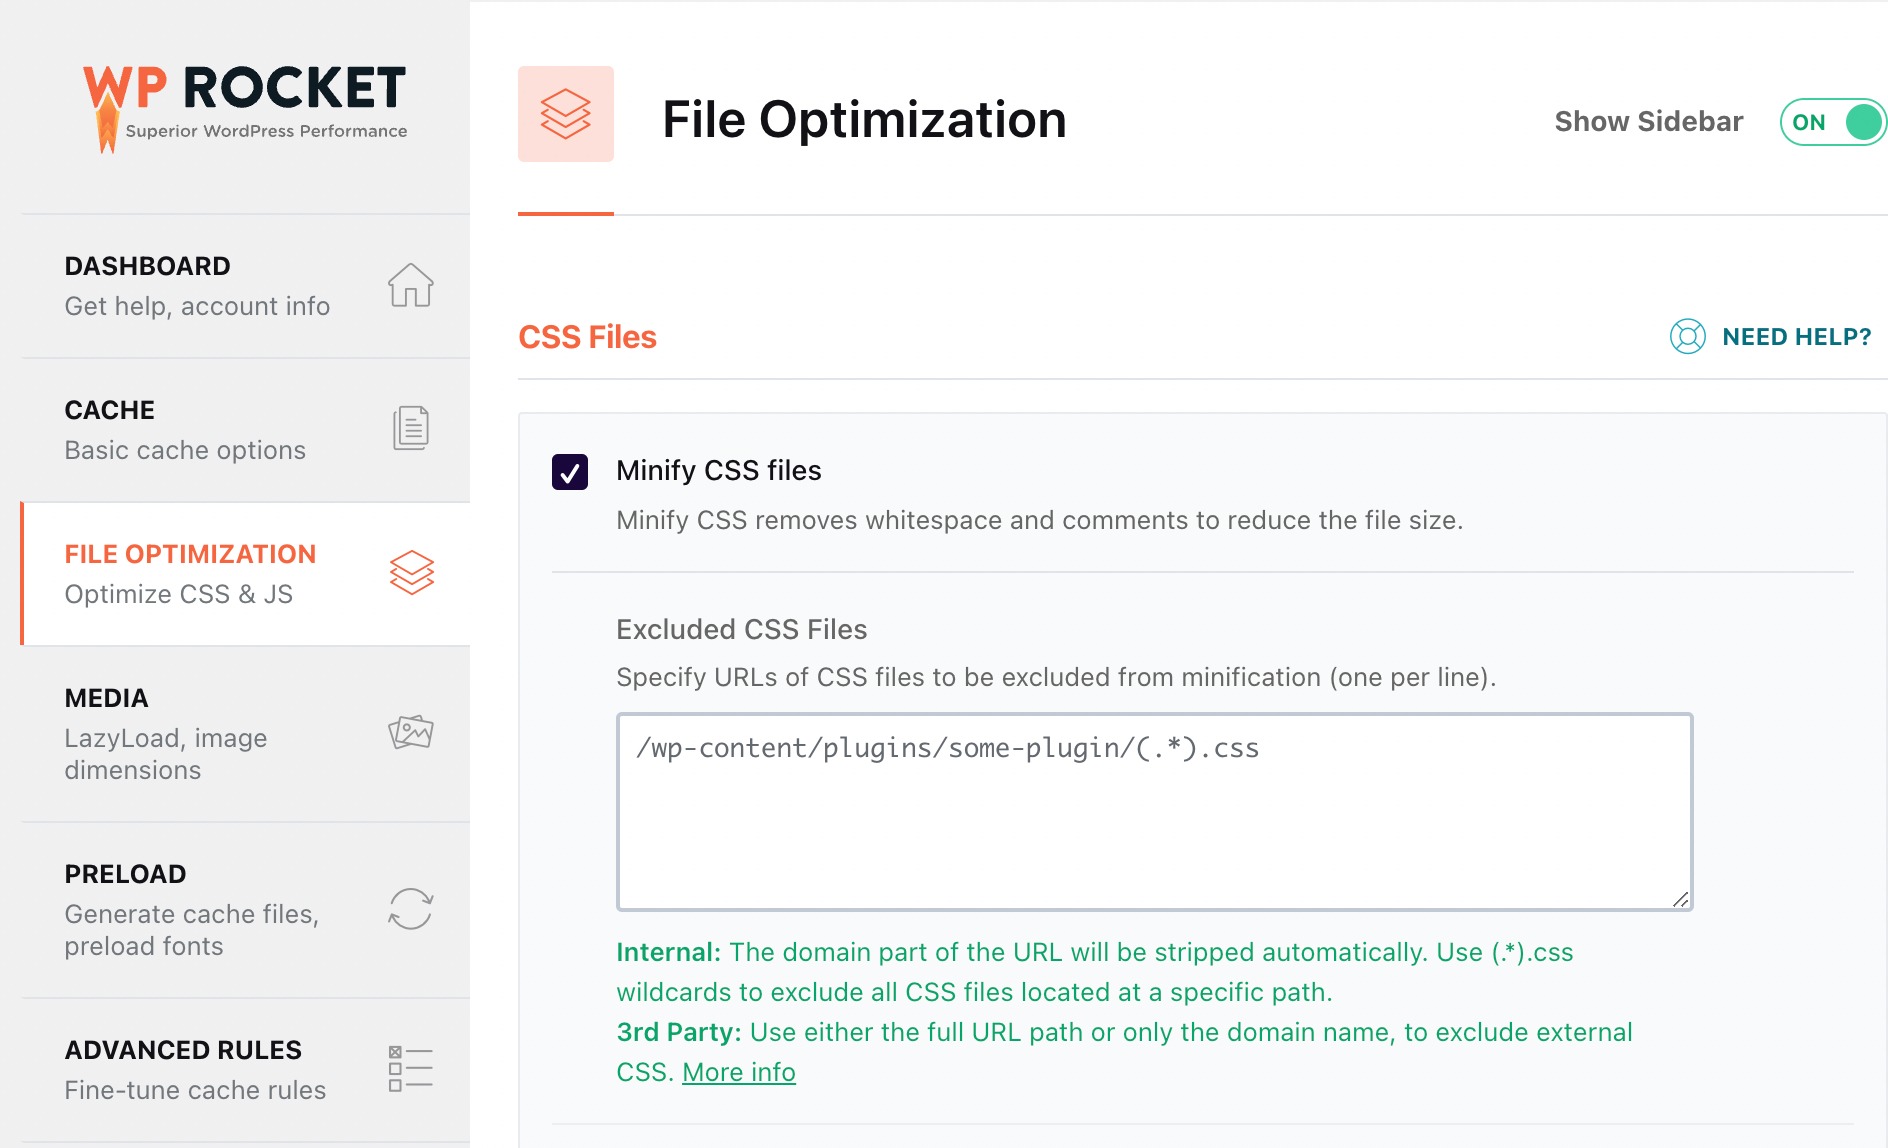 WP Rocket File Optimization settings